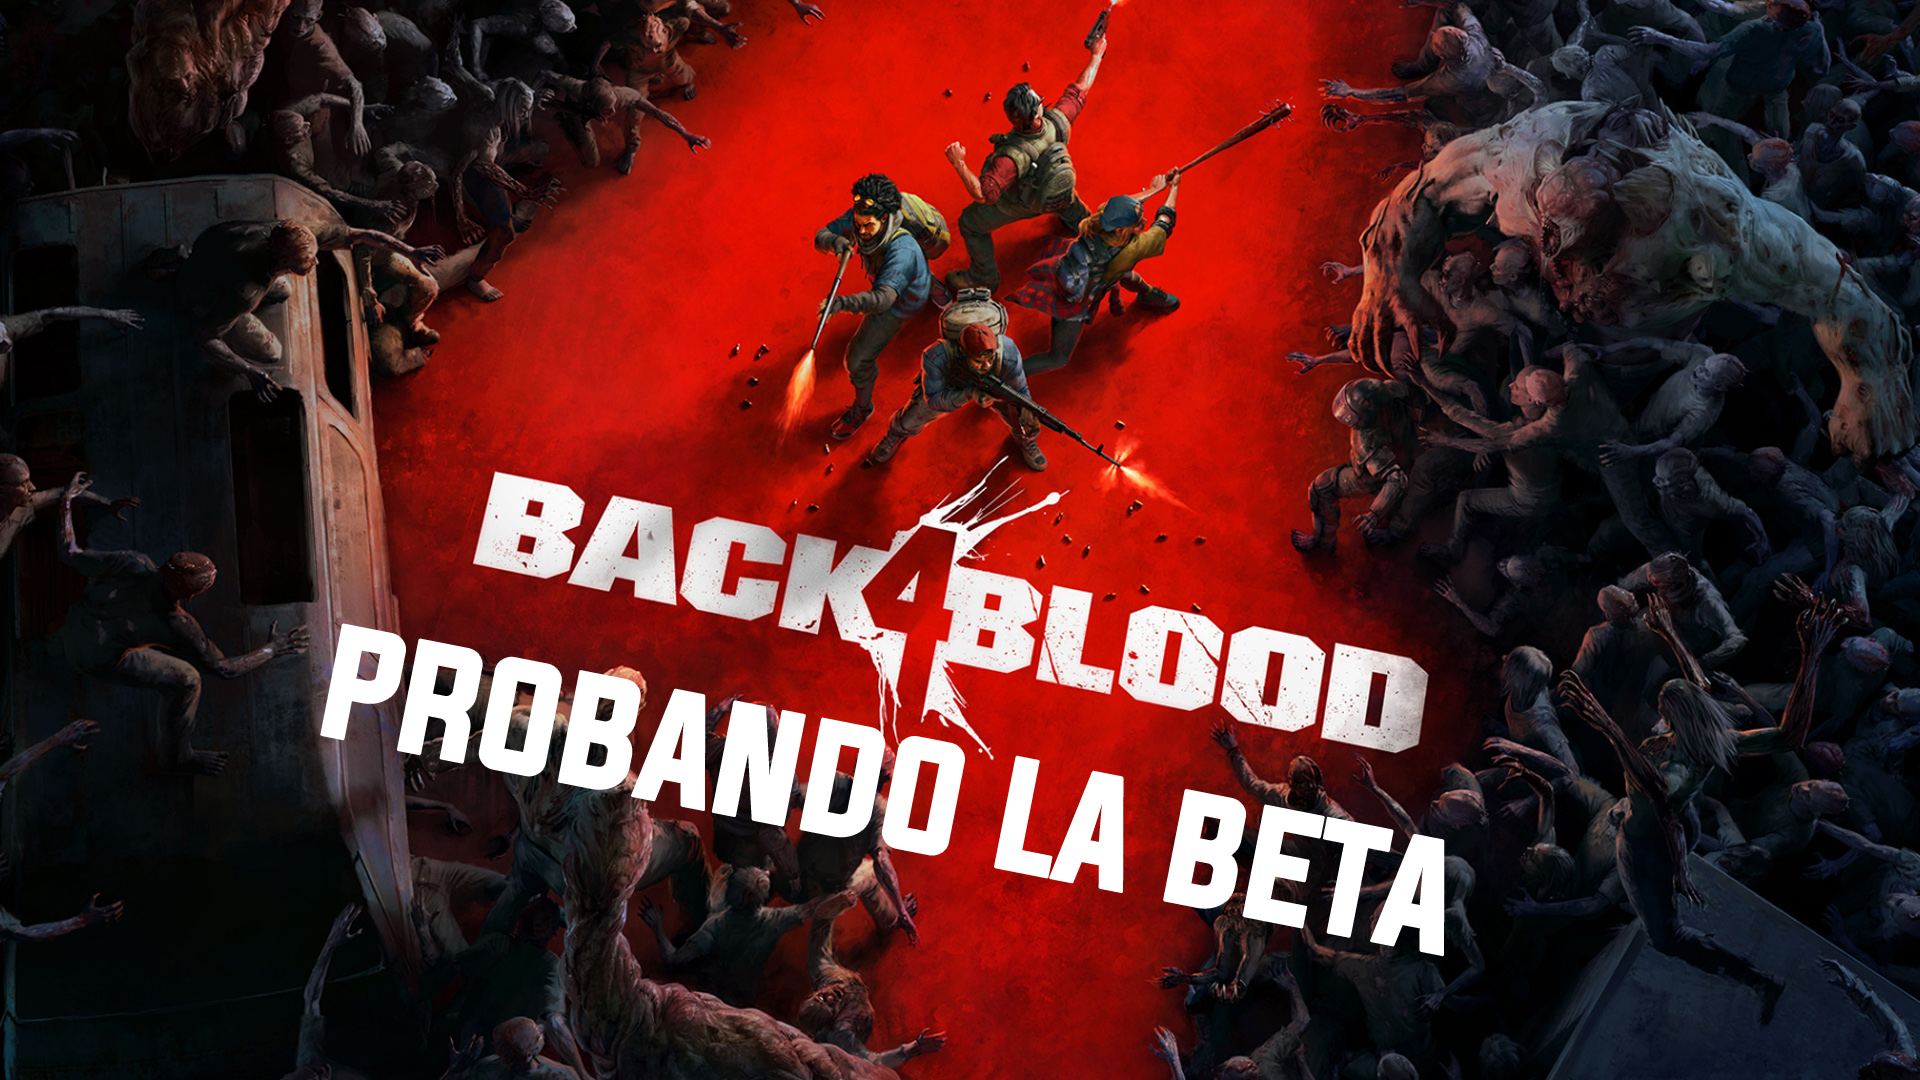 Probando la Beta de Back 4 Blood